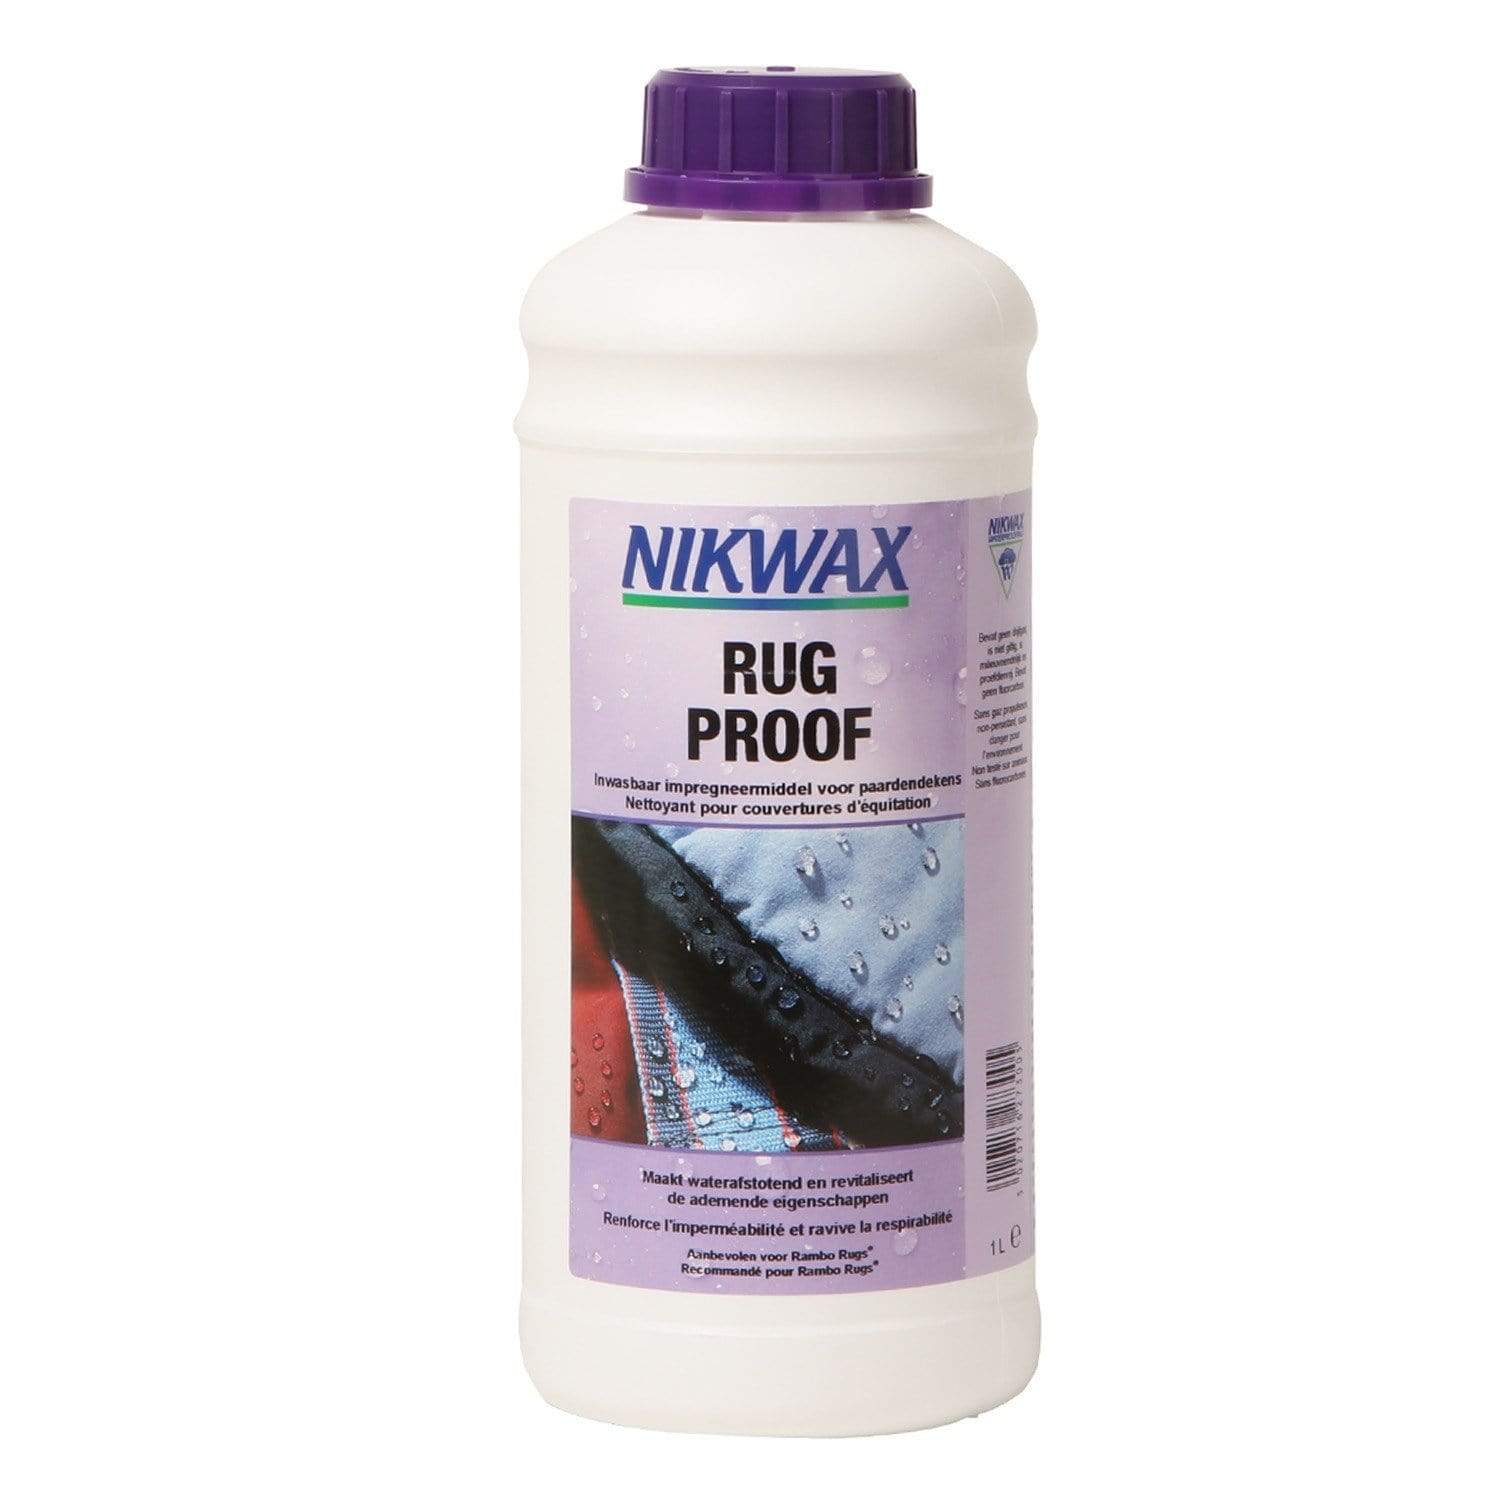 Nikwax Maintenance Products 1 L Nikwax Rug Proof